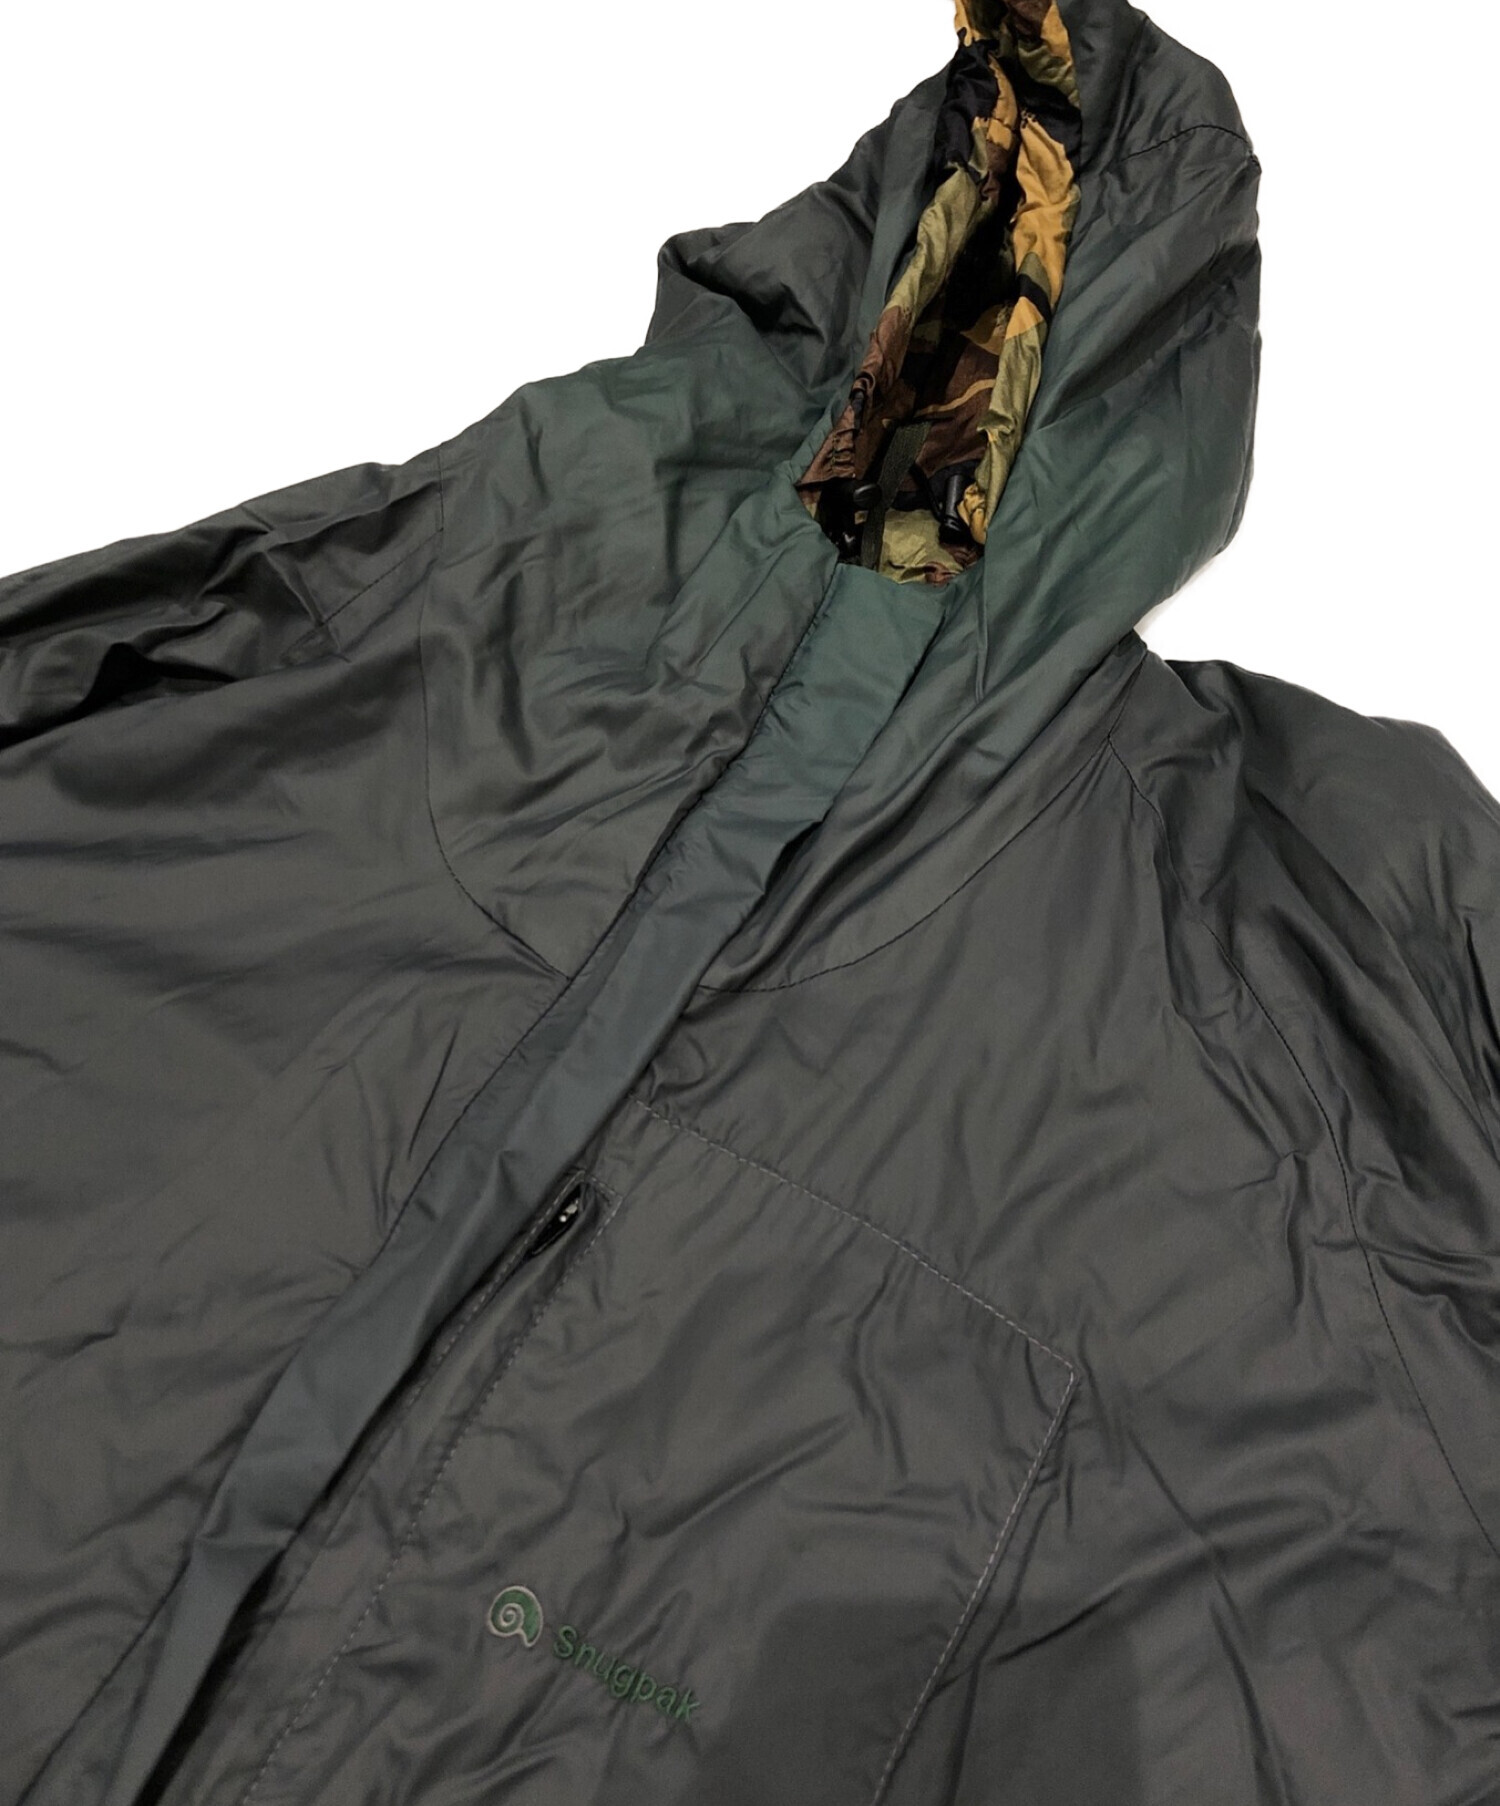 Snugpak (スナグパック) リバーシブル中綿ジャケット オリーブ サイズ:M